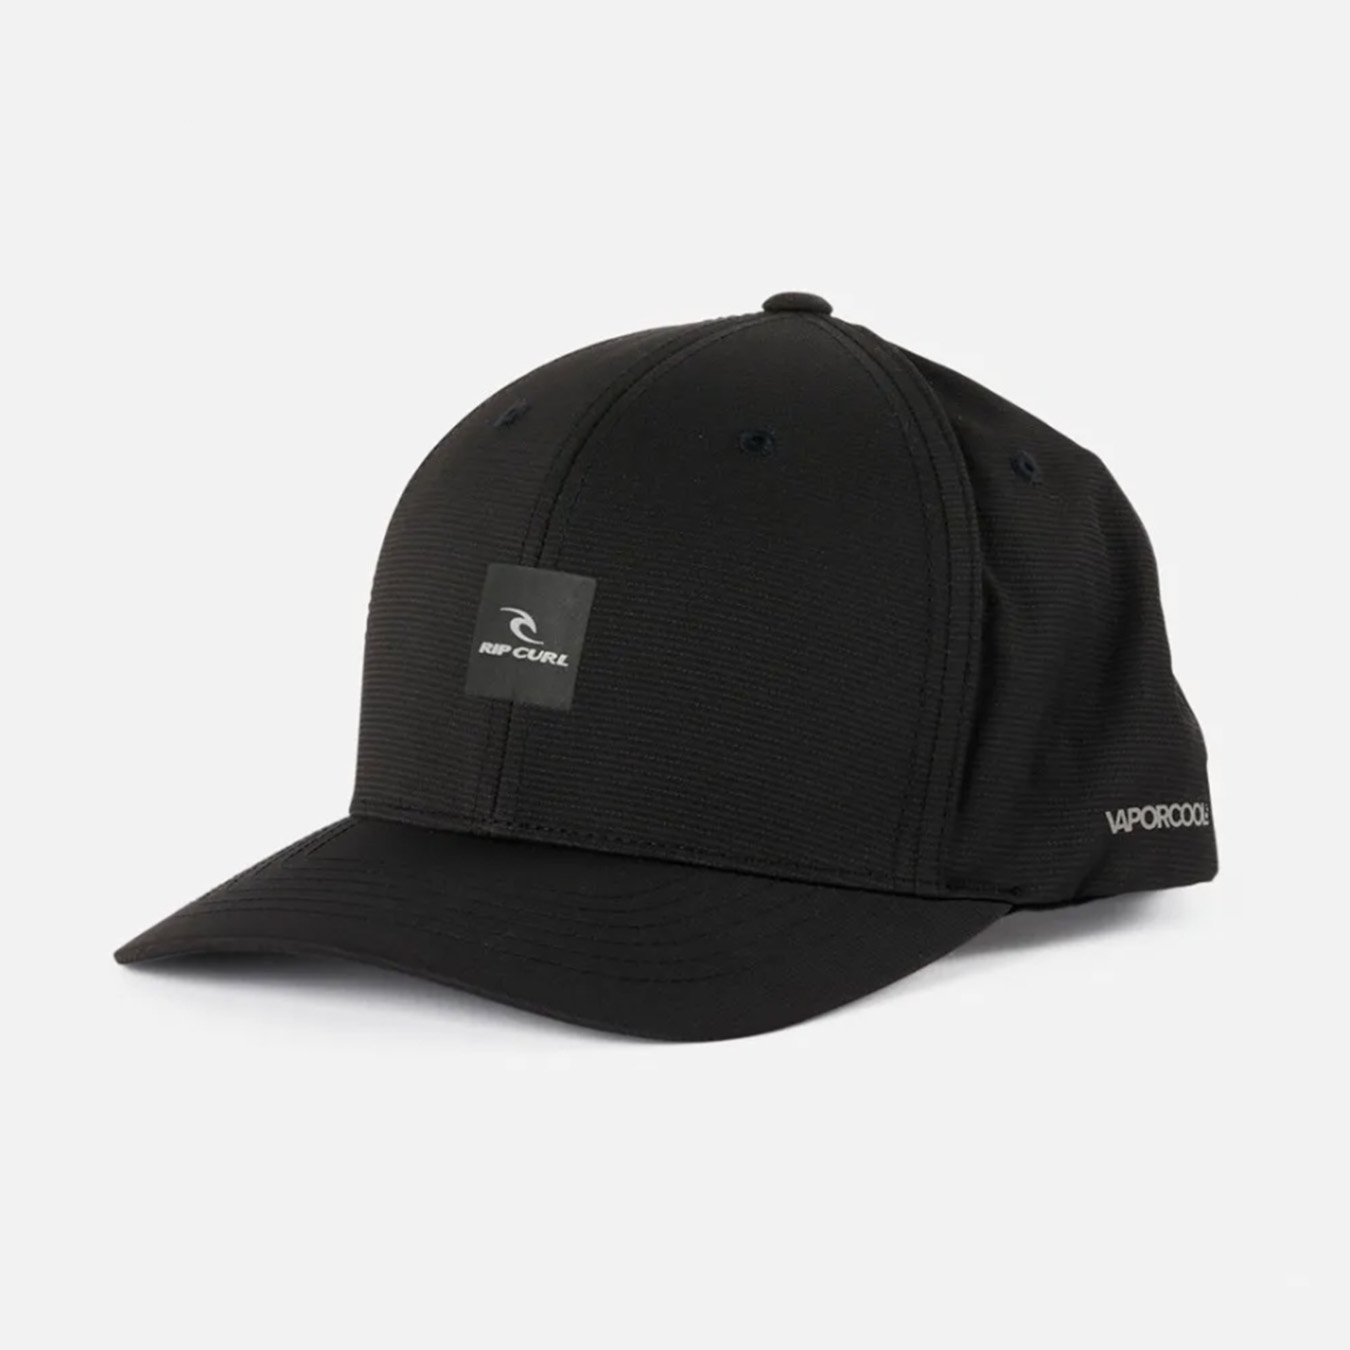 VaporCool Snapback Hat